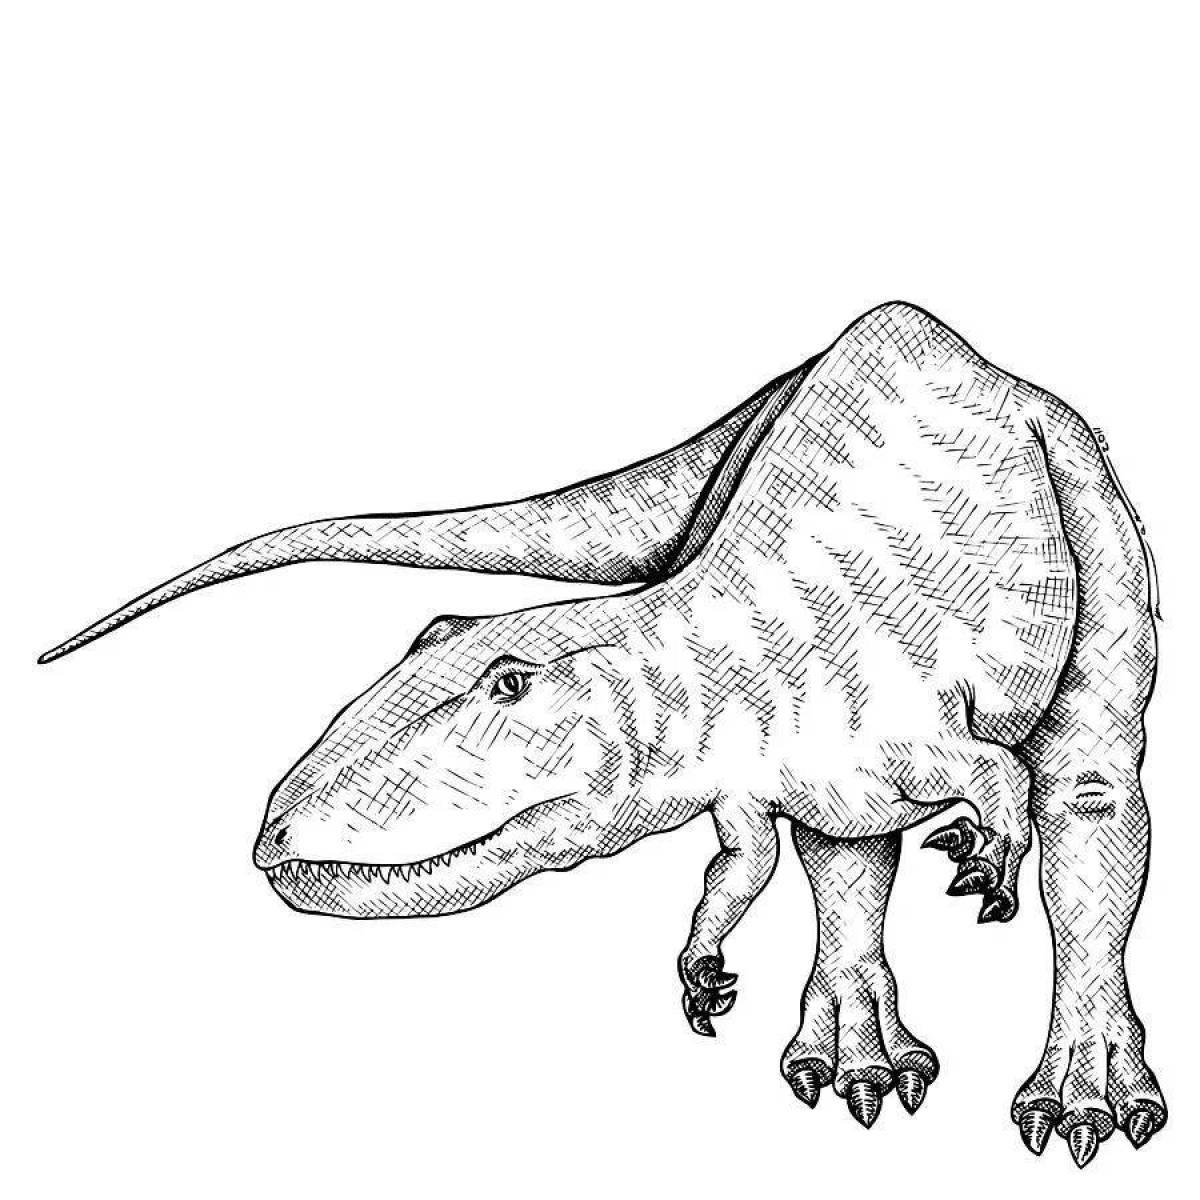 Эффектная раскраска кархародонтозавр